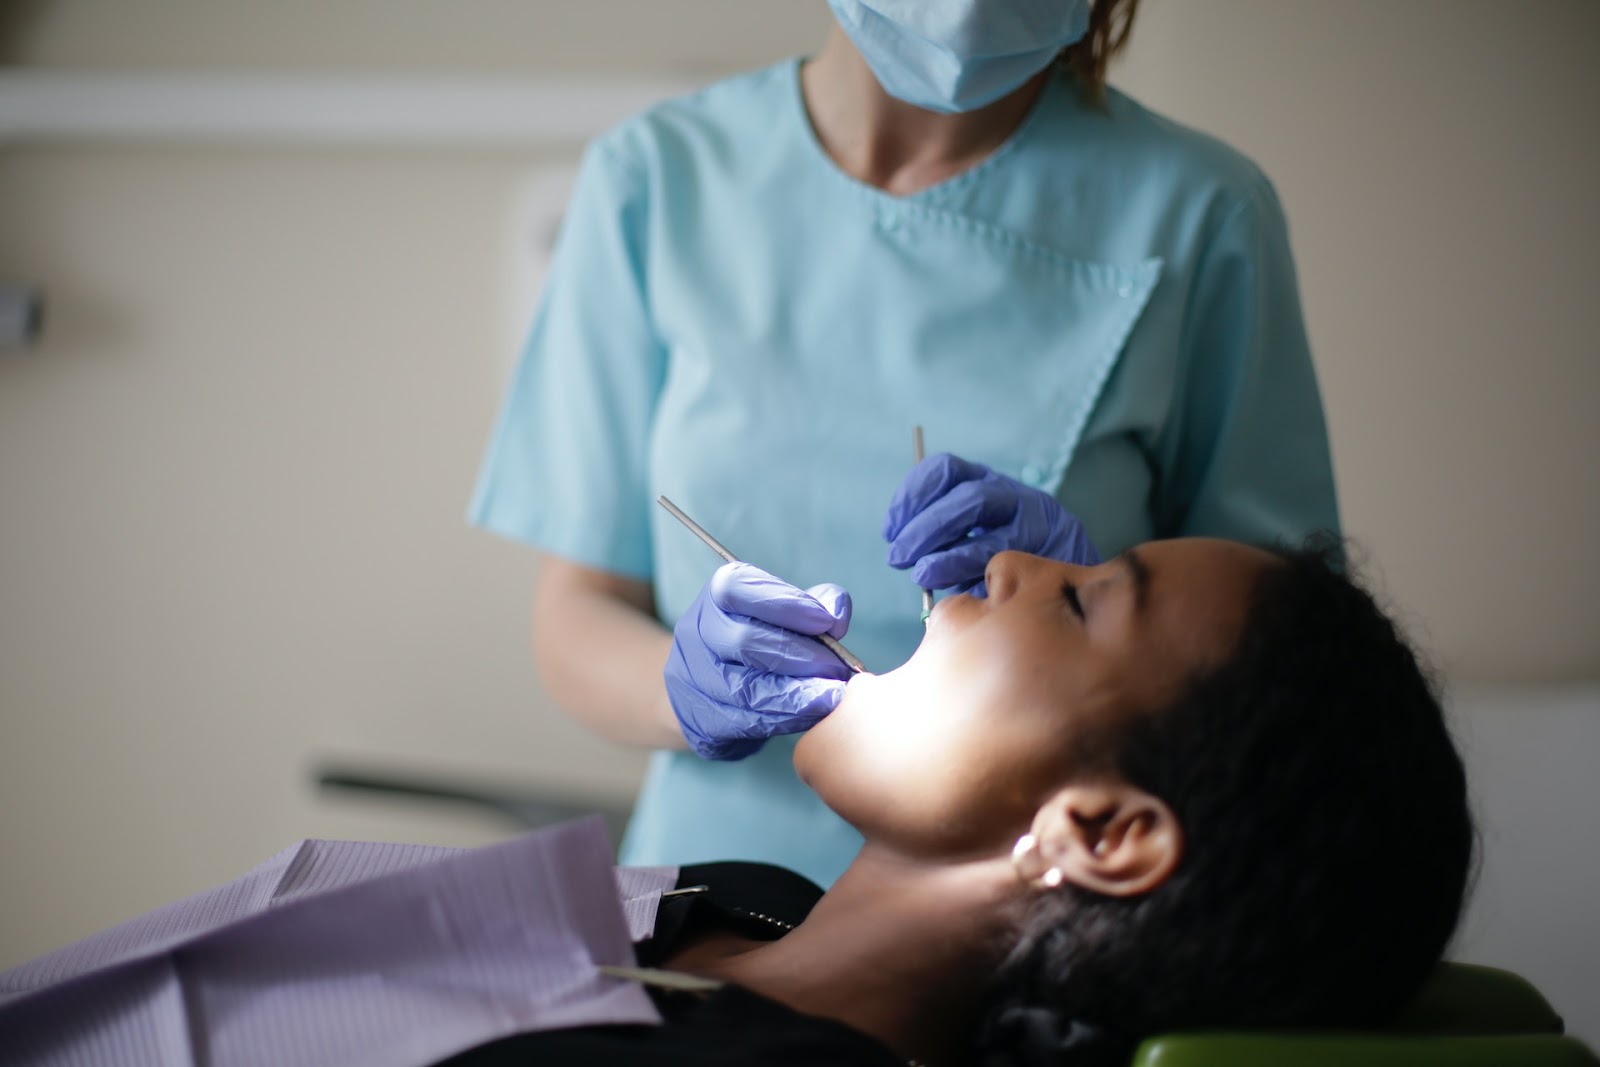 tools treating teeth of patient